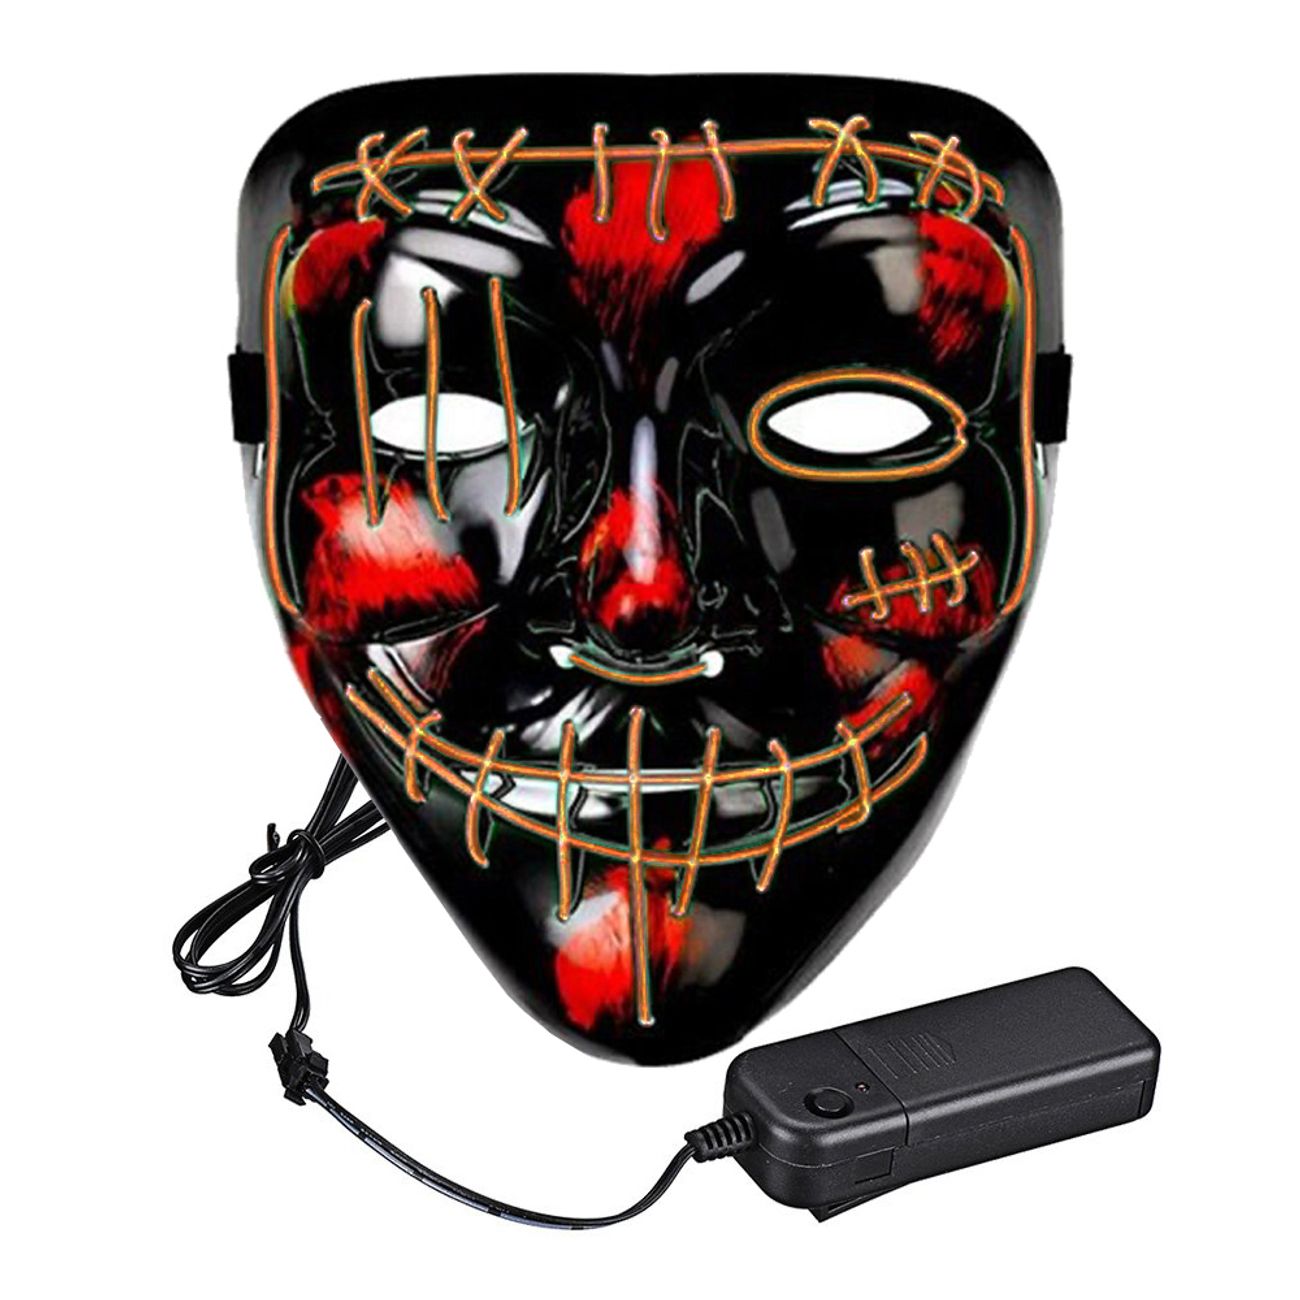 el-wire-purge-2-led-mask-35